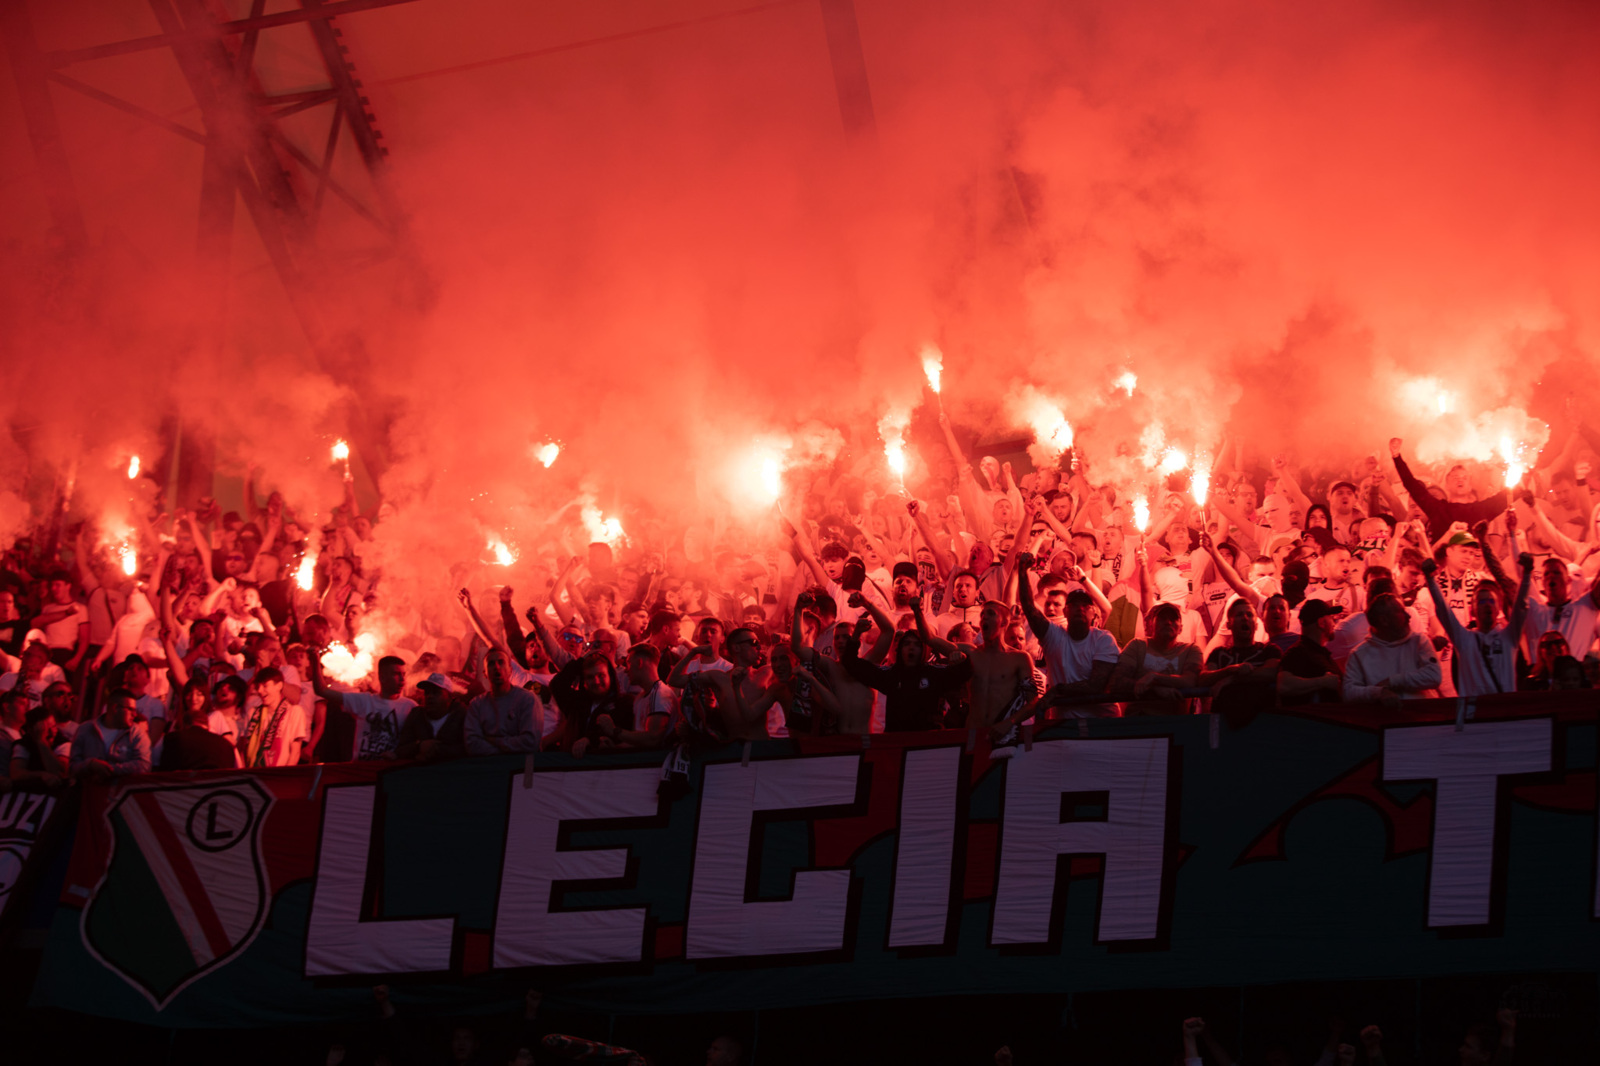 Lech Poznań - Legia Warszawa 1:2